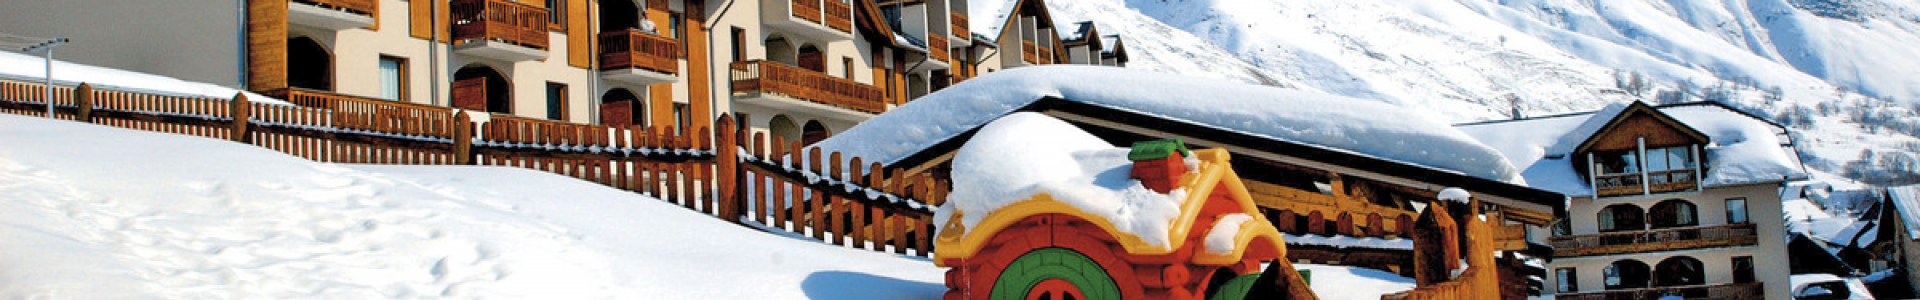 Odalys : promo ski locations 8j/7n aux vacances de Noël, - 30%